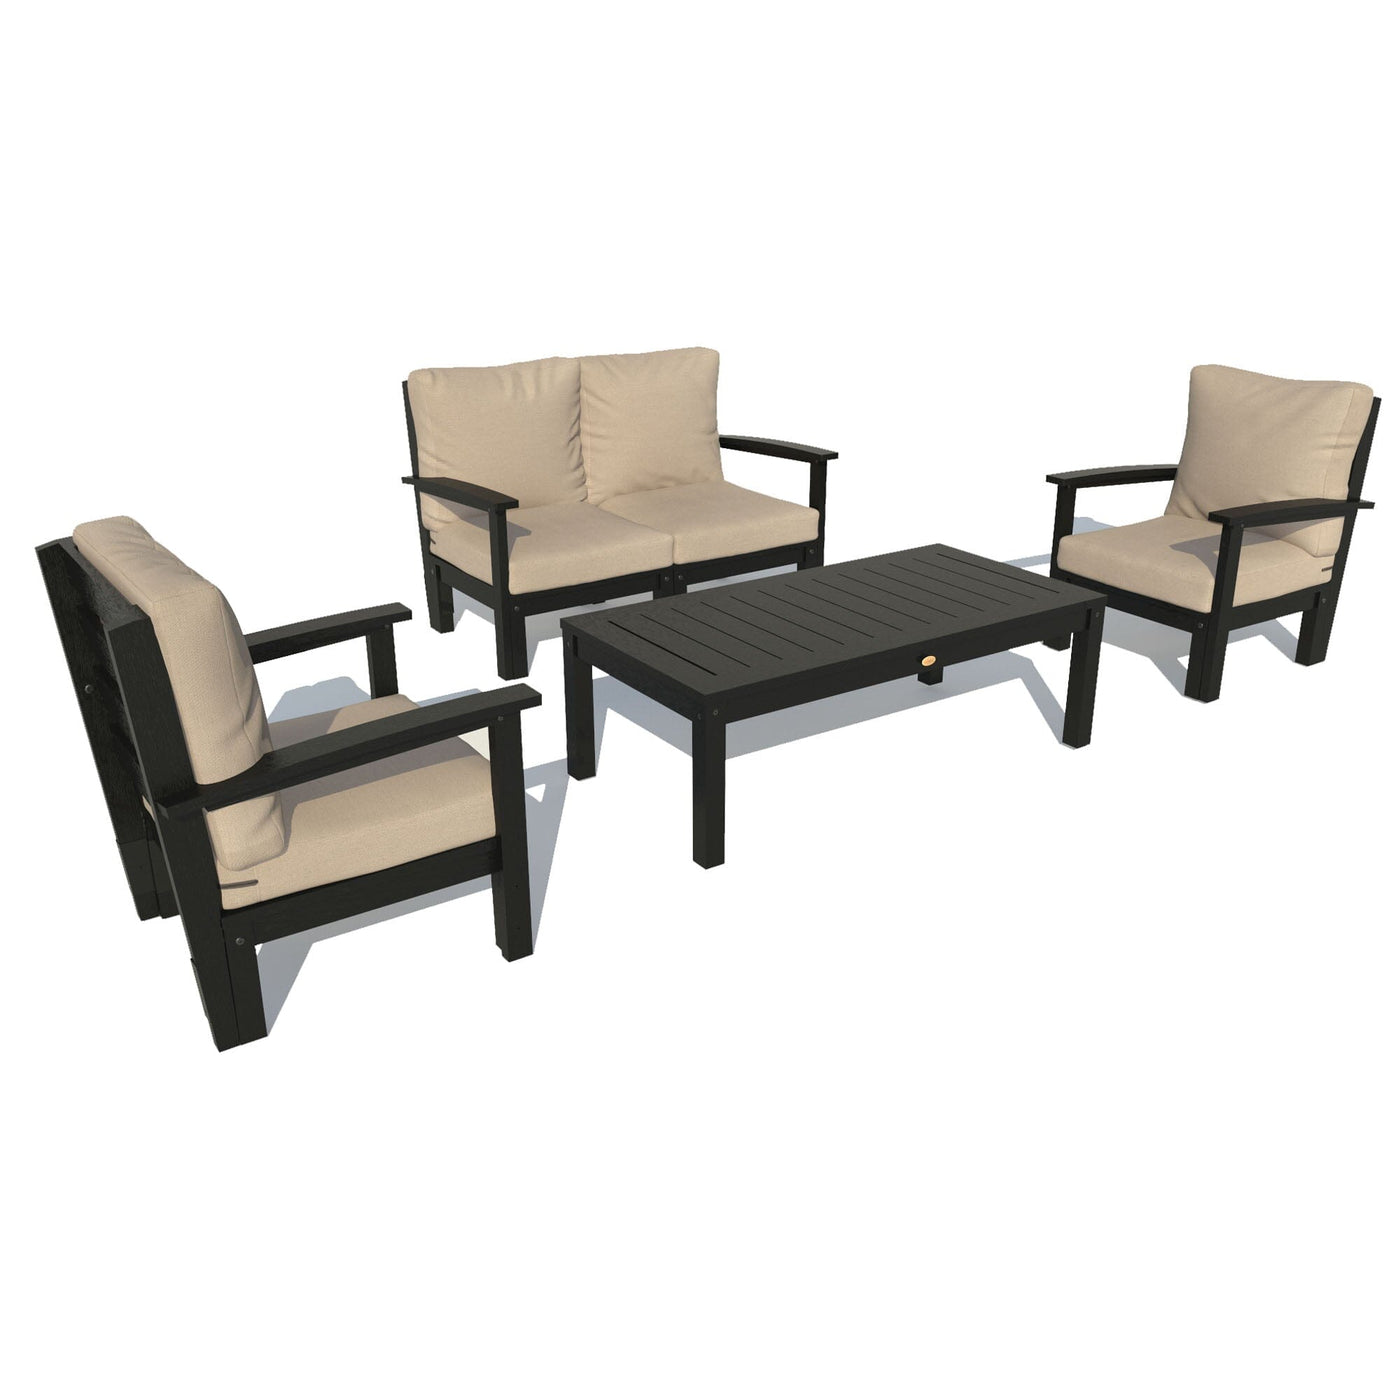 Bespoke Deep Seating: Loveseat, 2 Chair Set, and Conversation Table Deep Seating Highwood USA Driftwood Black 